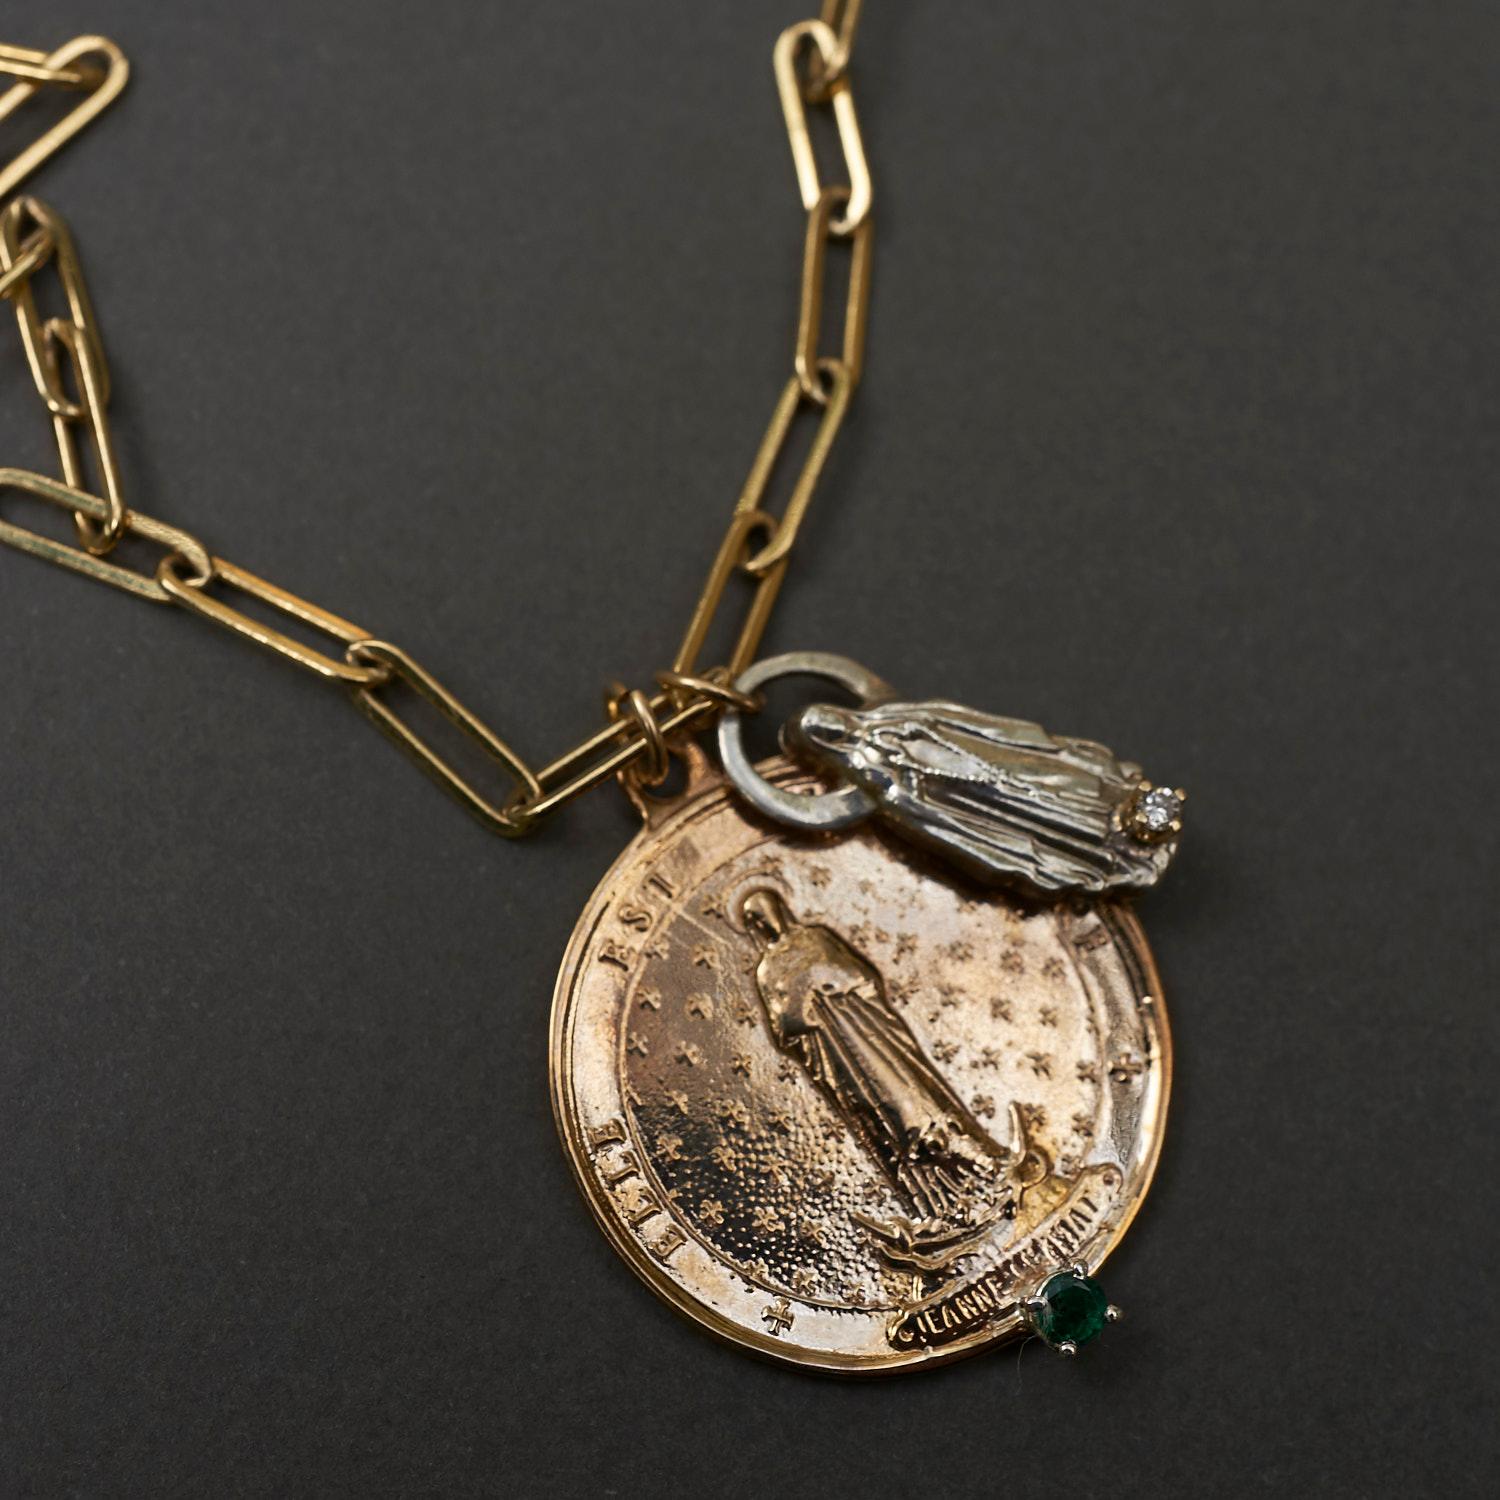 Brilliant Cut Medal Necklace Virgin Mary Emerald White Diamond Silver Bronze J Dauphin For Sale